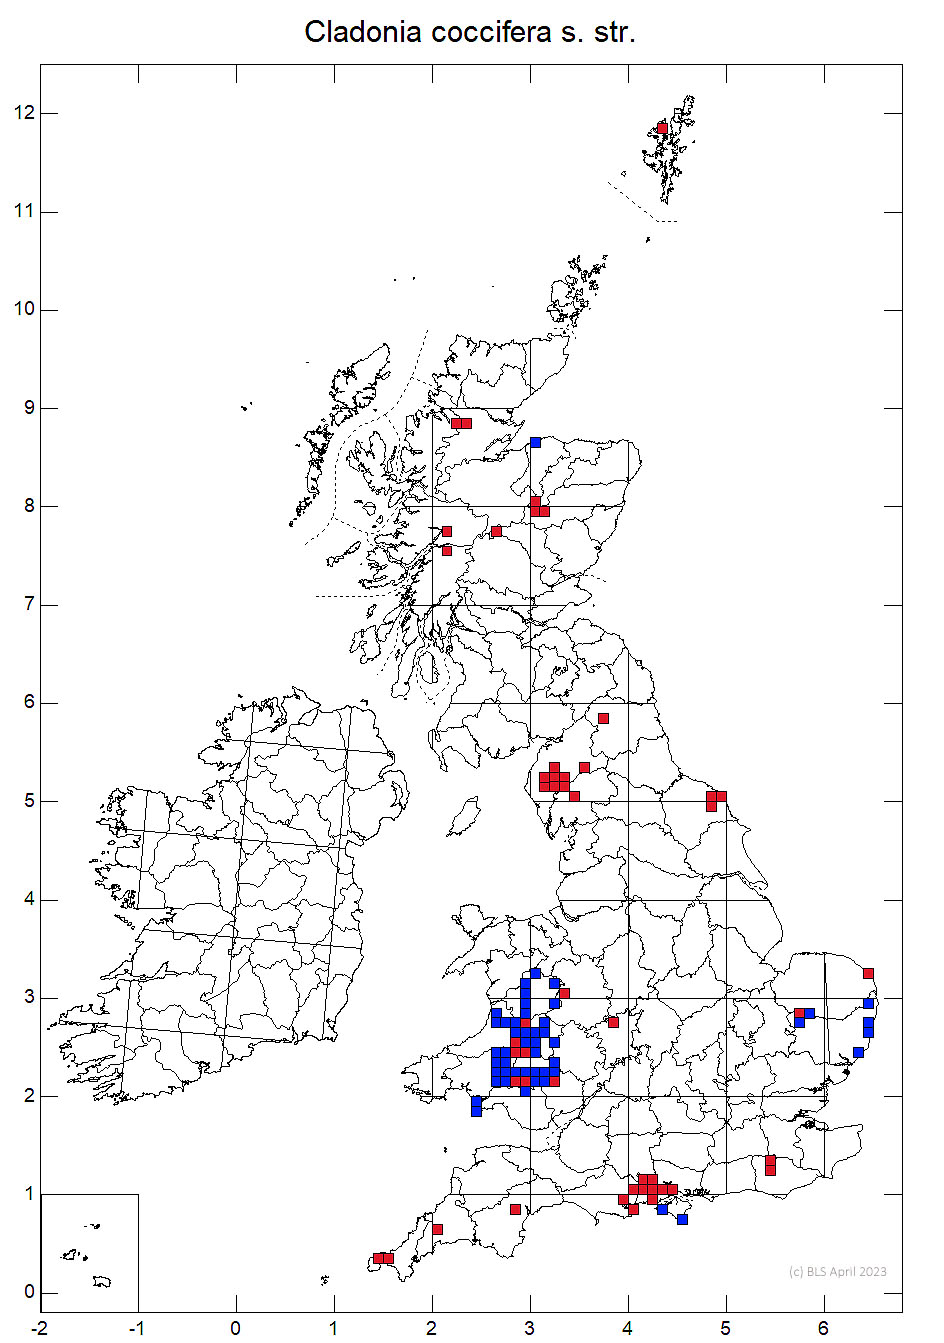 Cladonia coccifera s. str. 10km sq distribution map